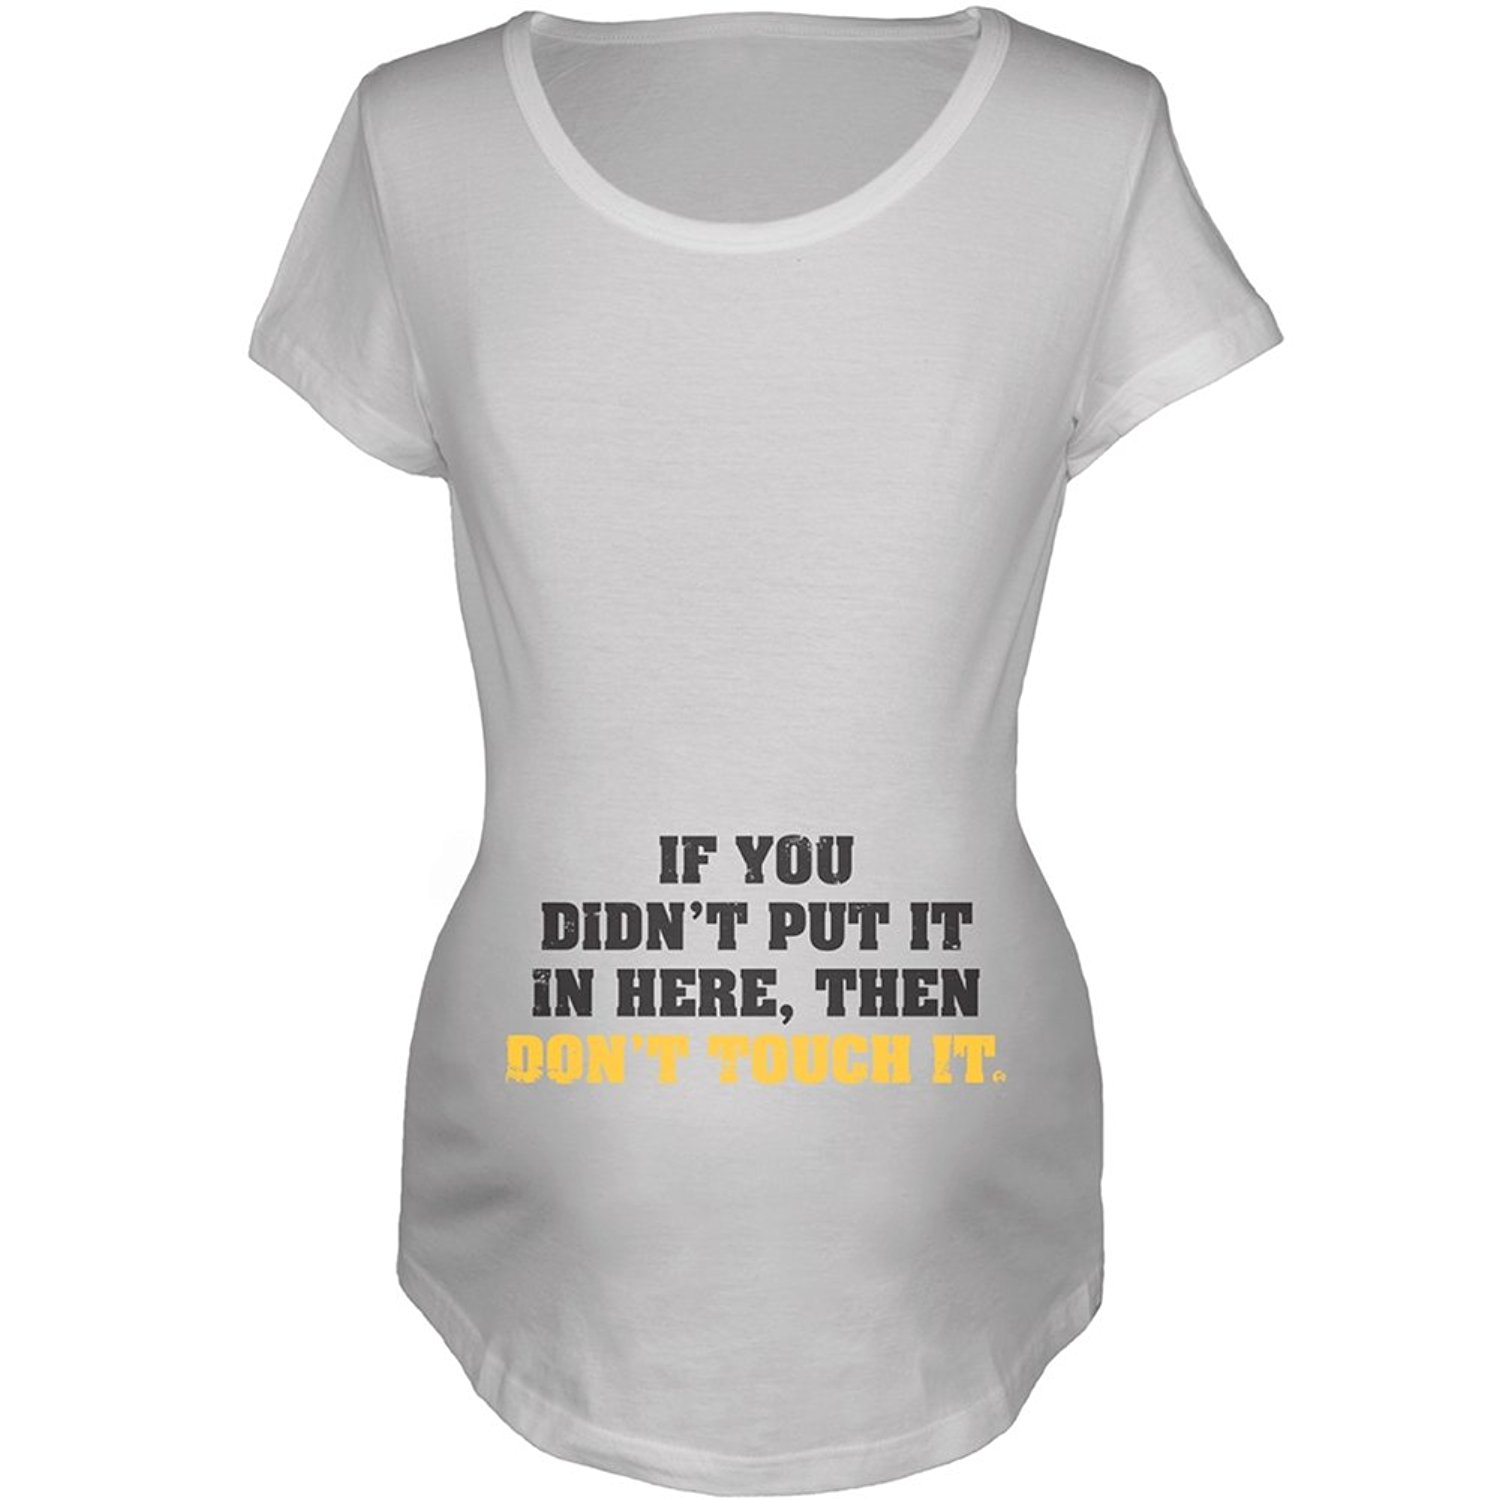 maternity shirts amazon.com: donu0027t touch it maternity shirt: clothing emfexfa